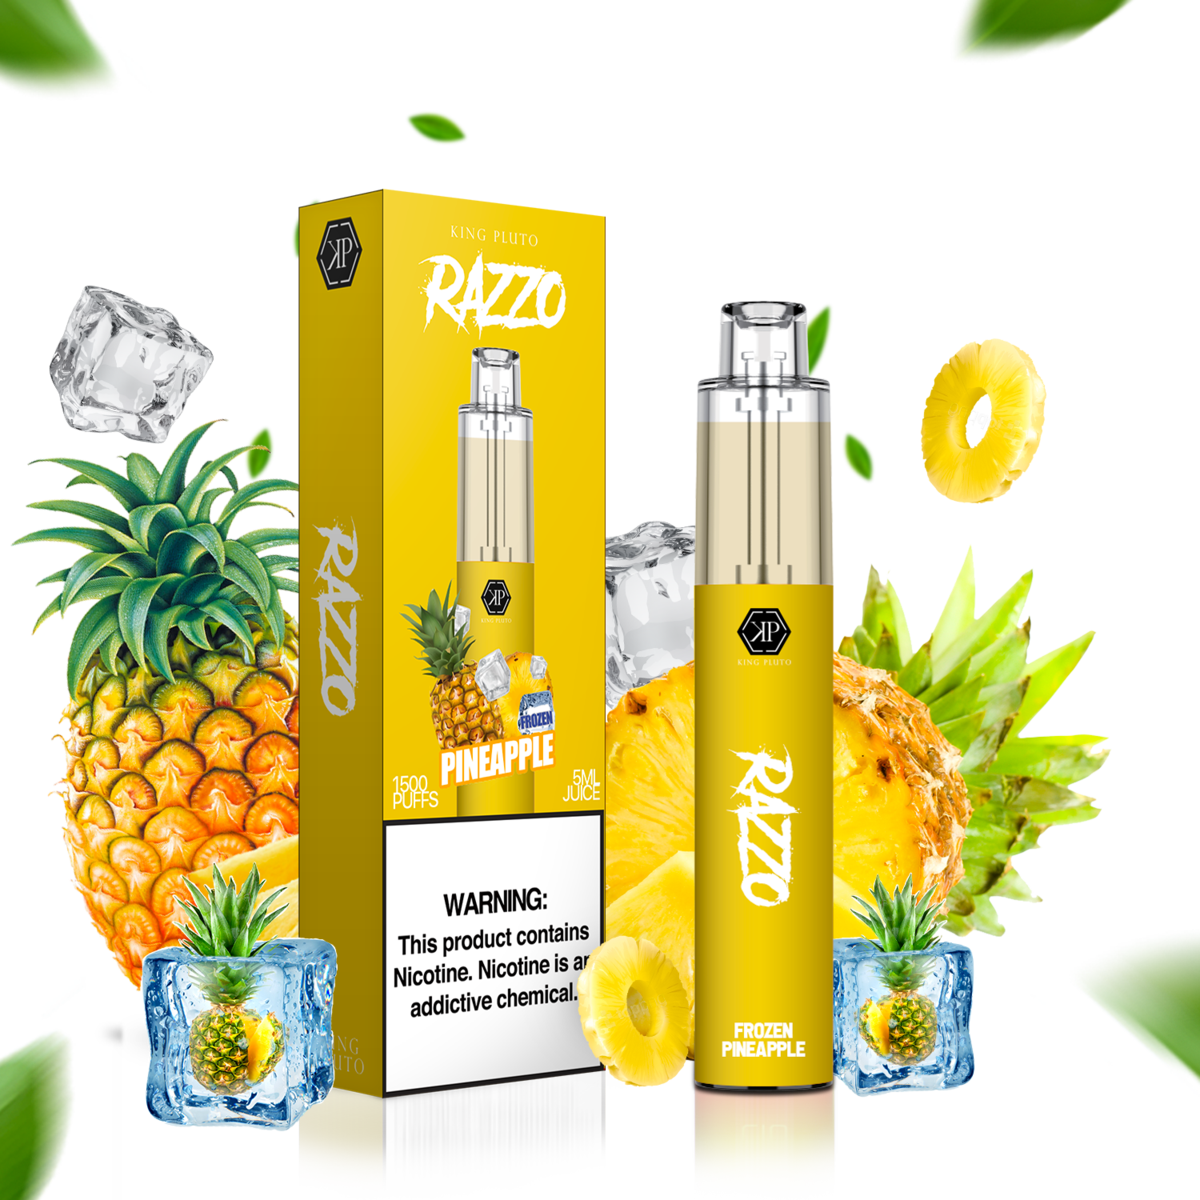 King Pluto Razzo Disposable Vape 5mL Best Flavor Frozen Pineapple